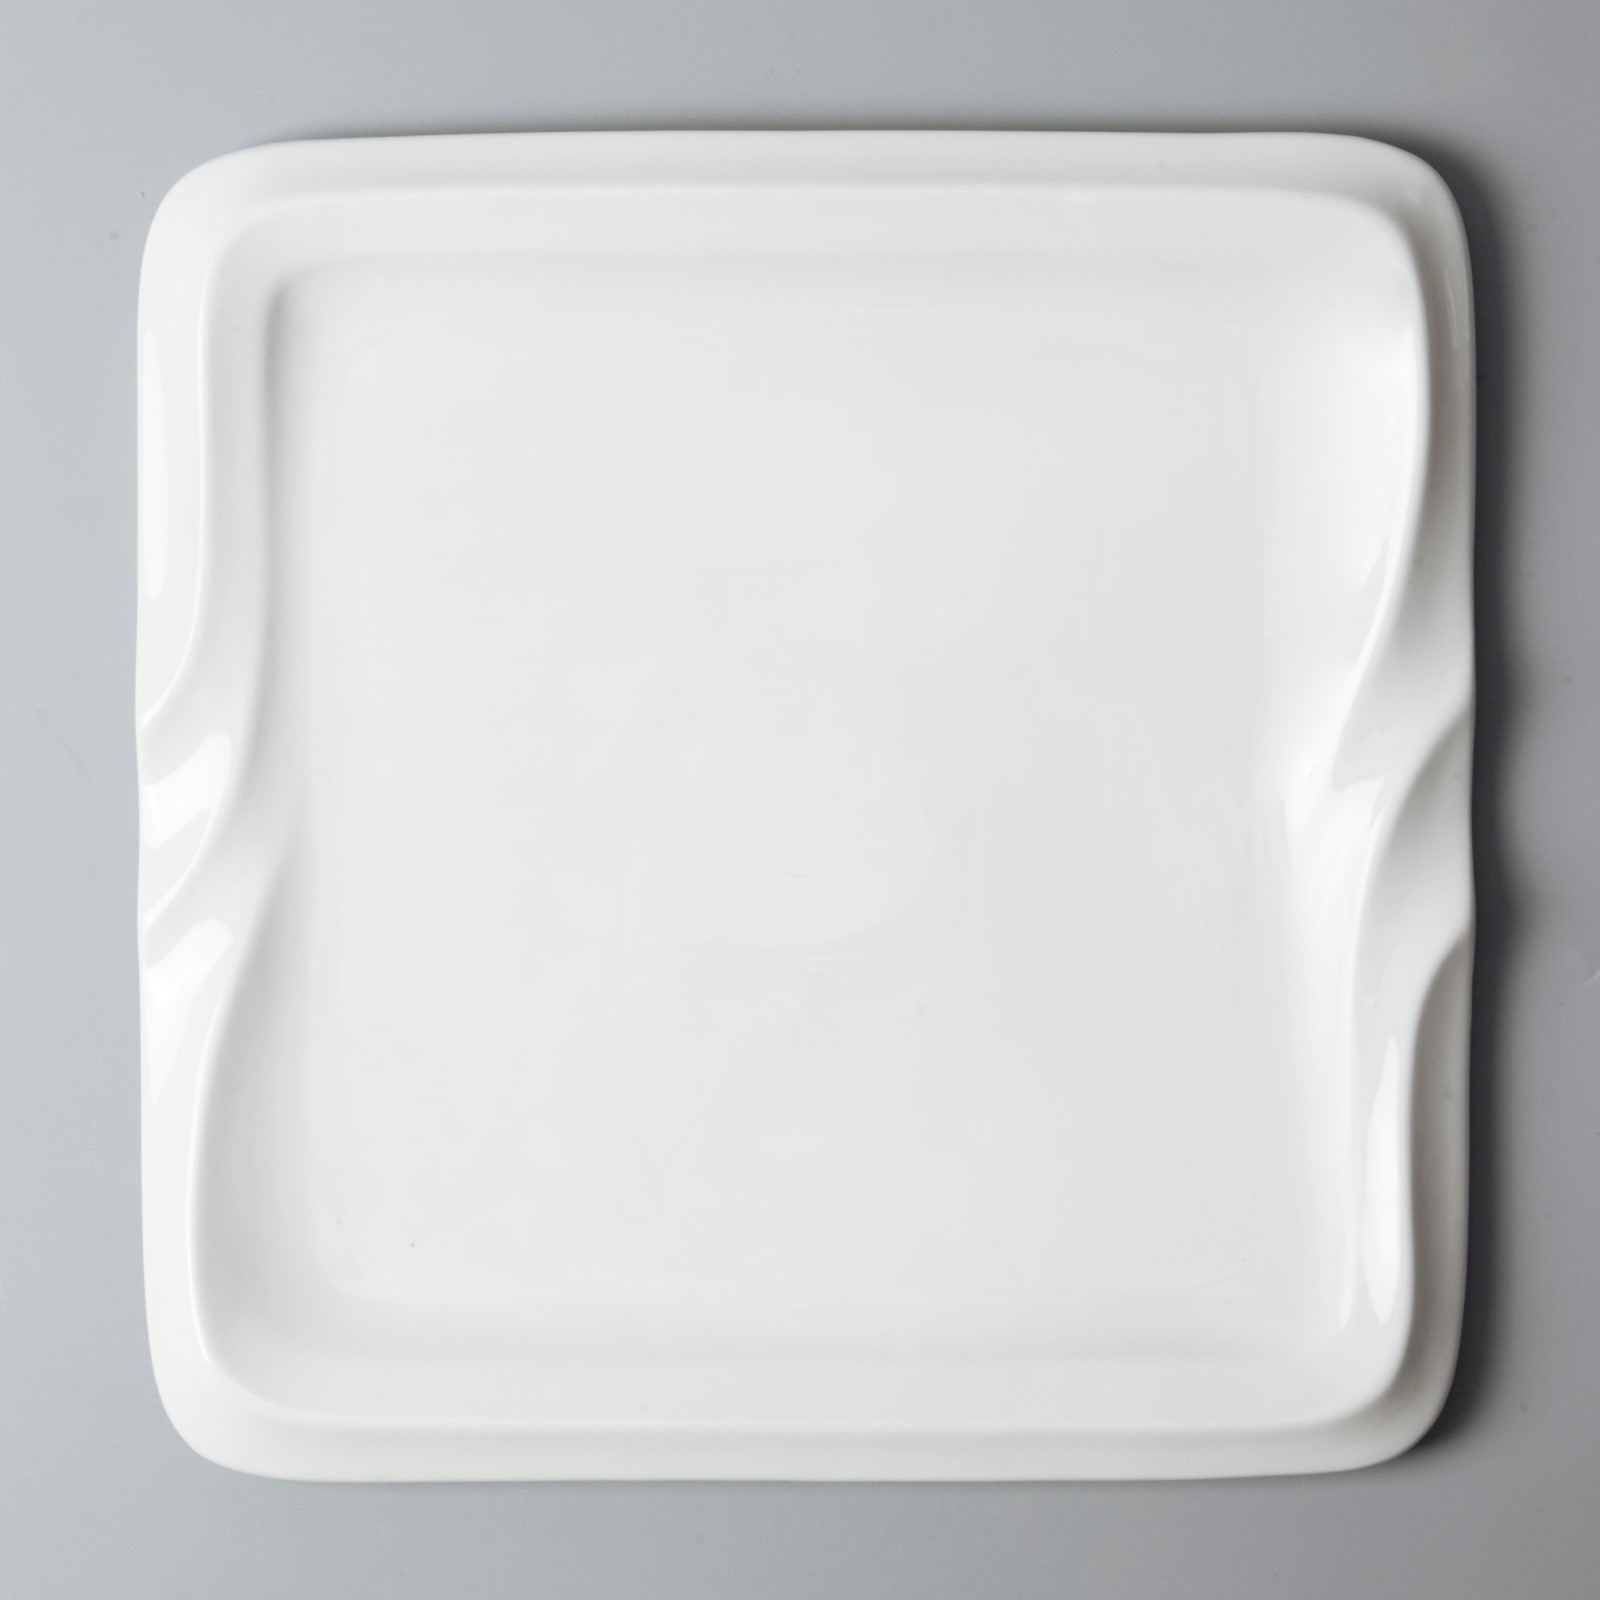 rim white plate set series for hotel-12